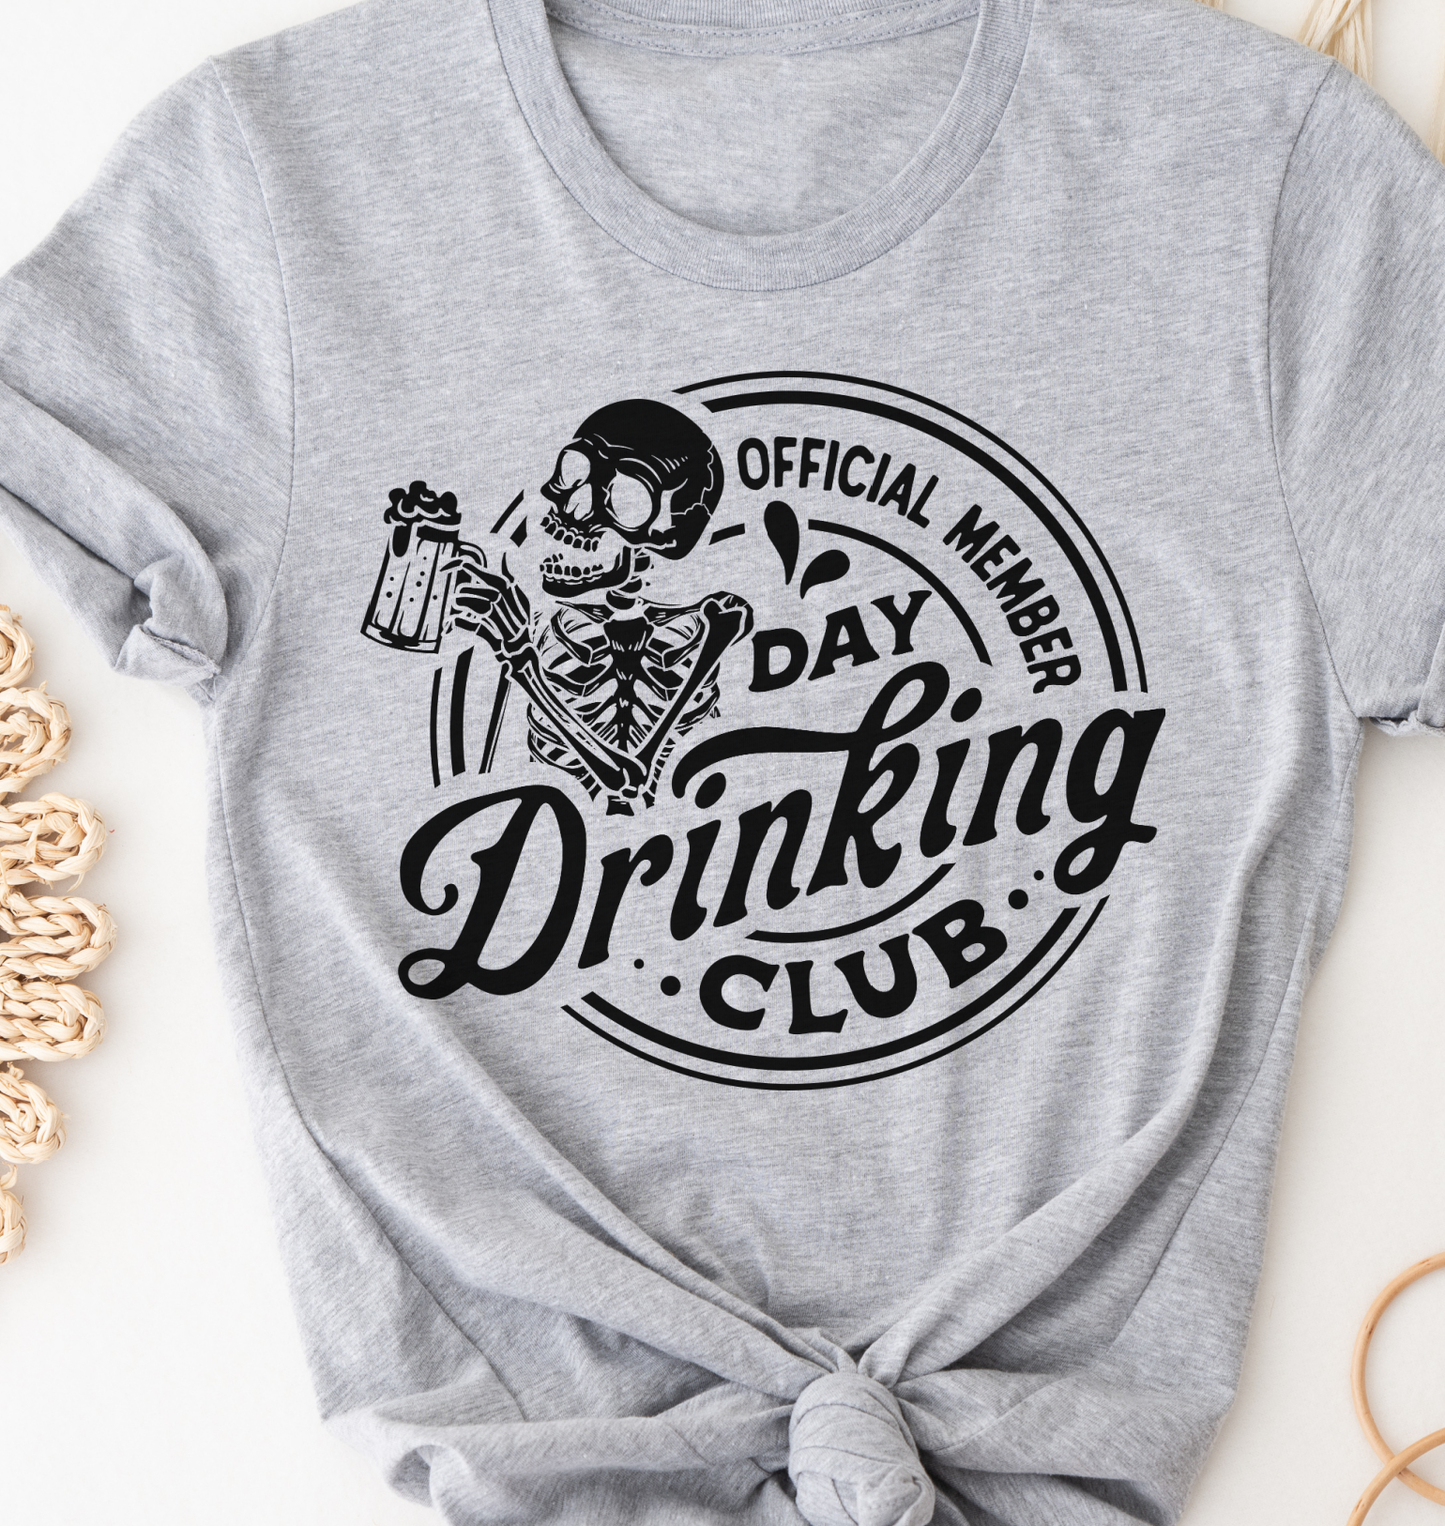 Day Drinking Club T-Shirt Sarcastic Funny Tshirt Hilarious Sarcasm Tee Funny Sarcastic Shirt